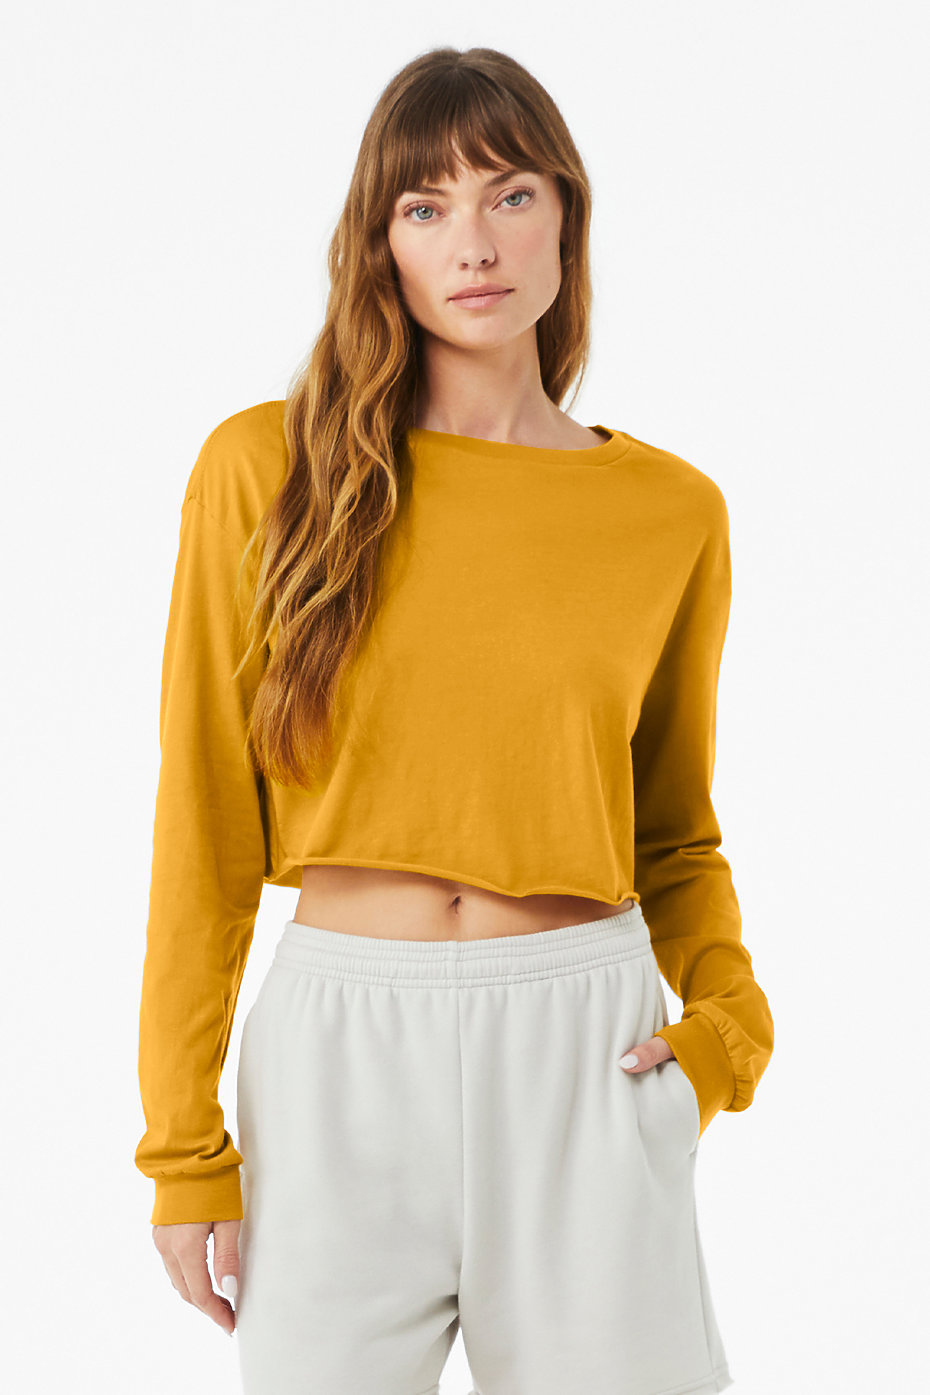 ® Clothing BELLA+CANVAS Womens Plain Blank | | Wholesale T Long Crop Shirts | Sleeve Top